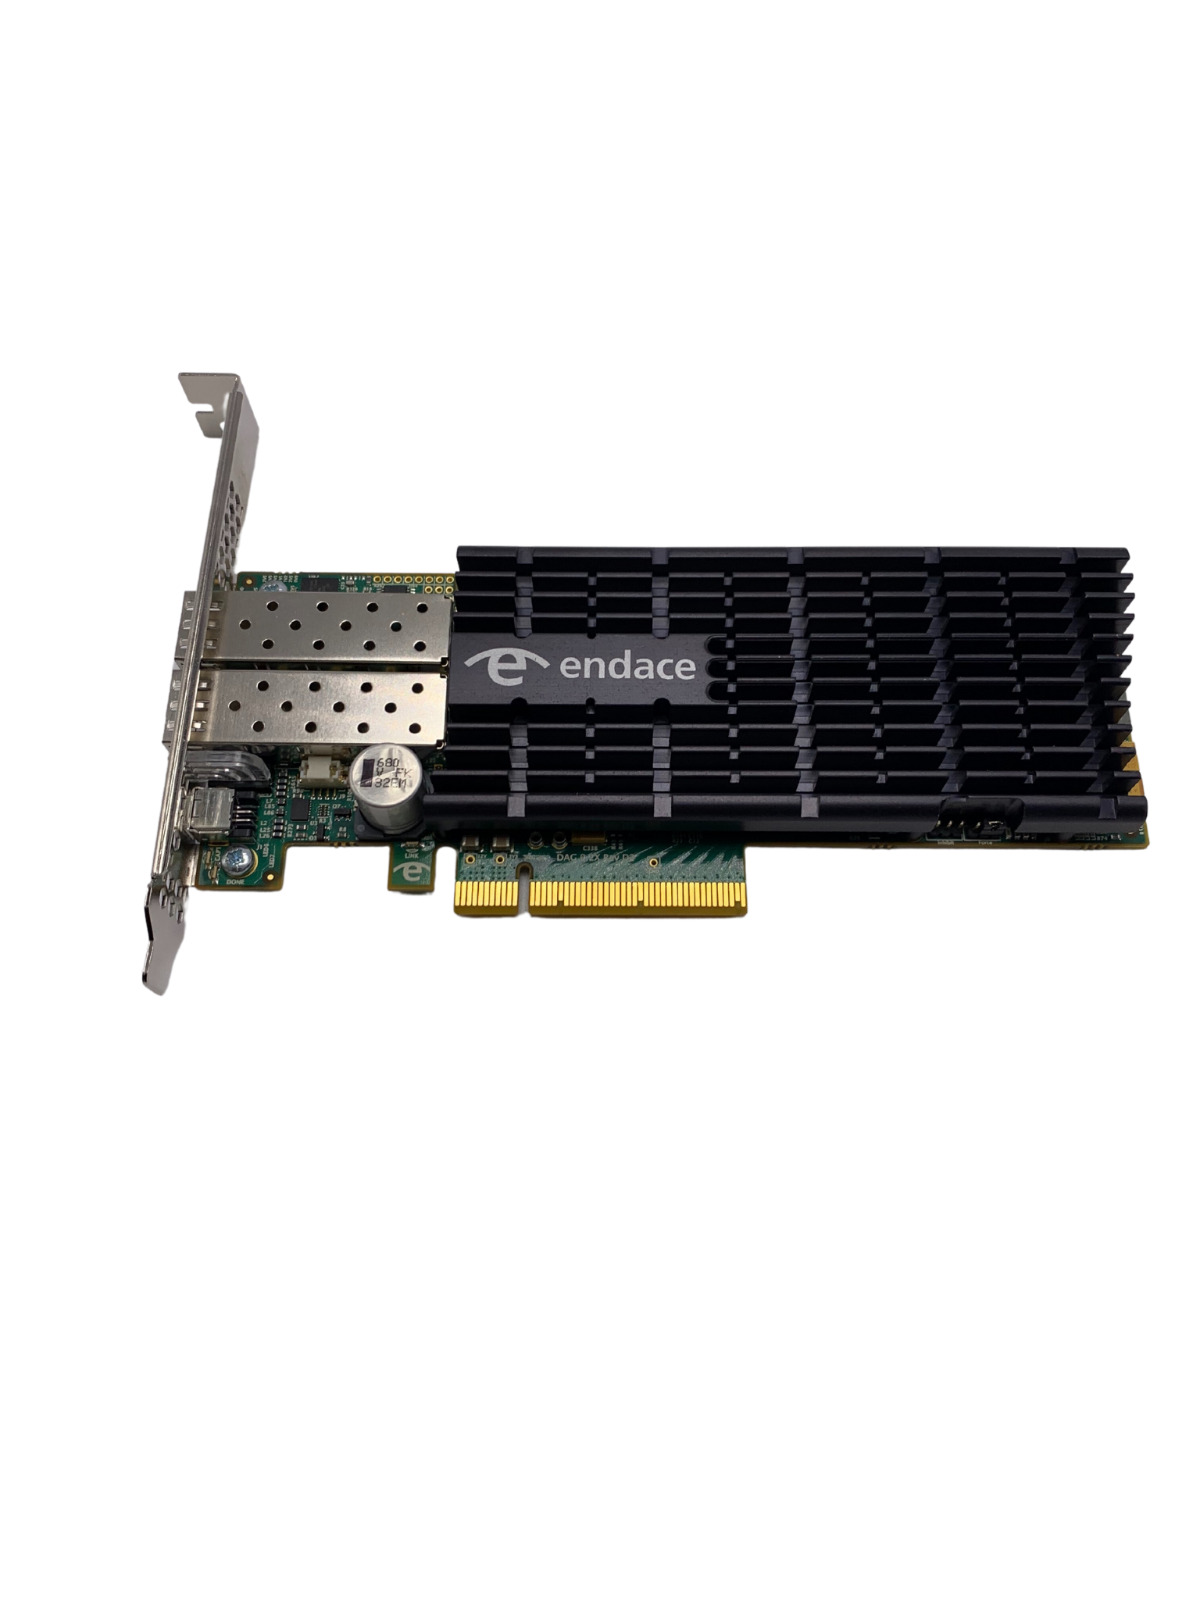 Endace DAG 9.2X REV D2 2-Port 10Gbs PCI-E 2.0 x8 SFP+ NDC